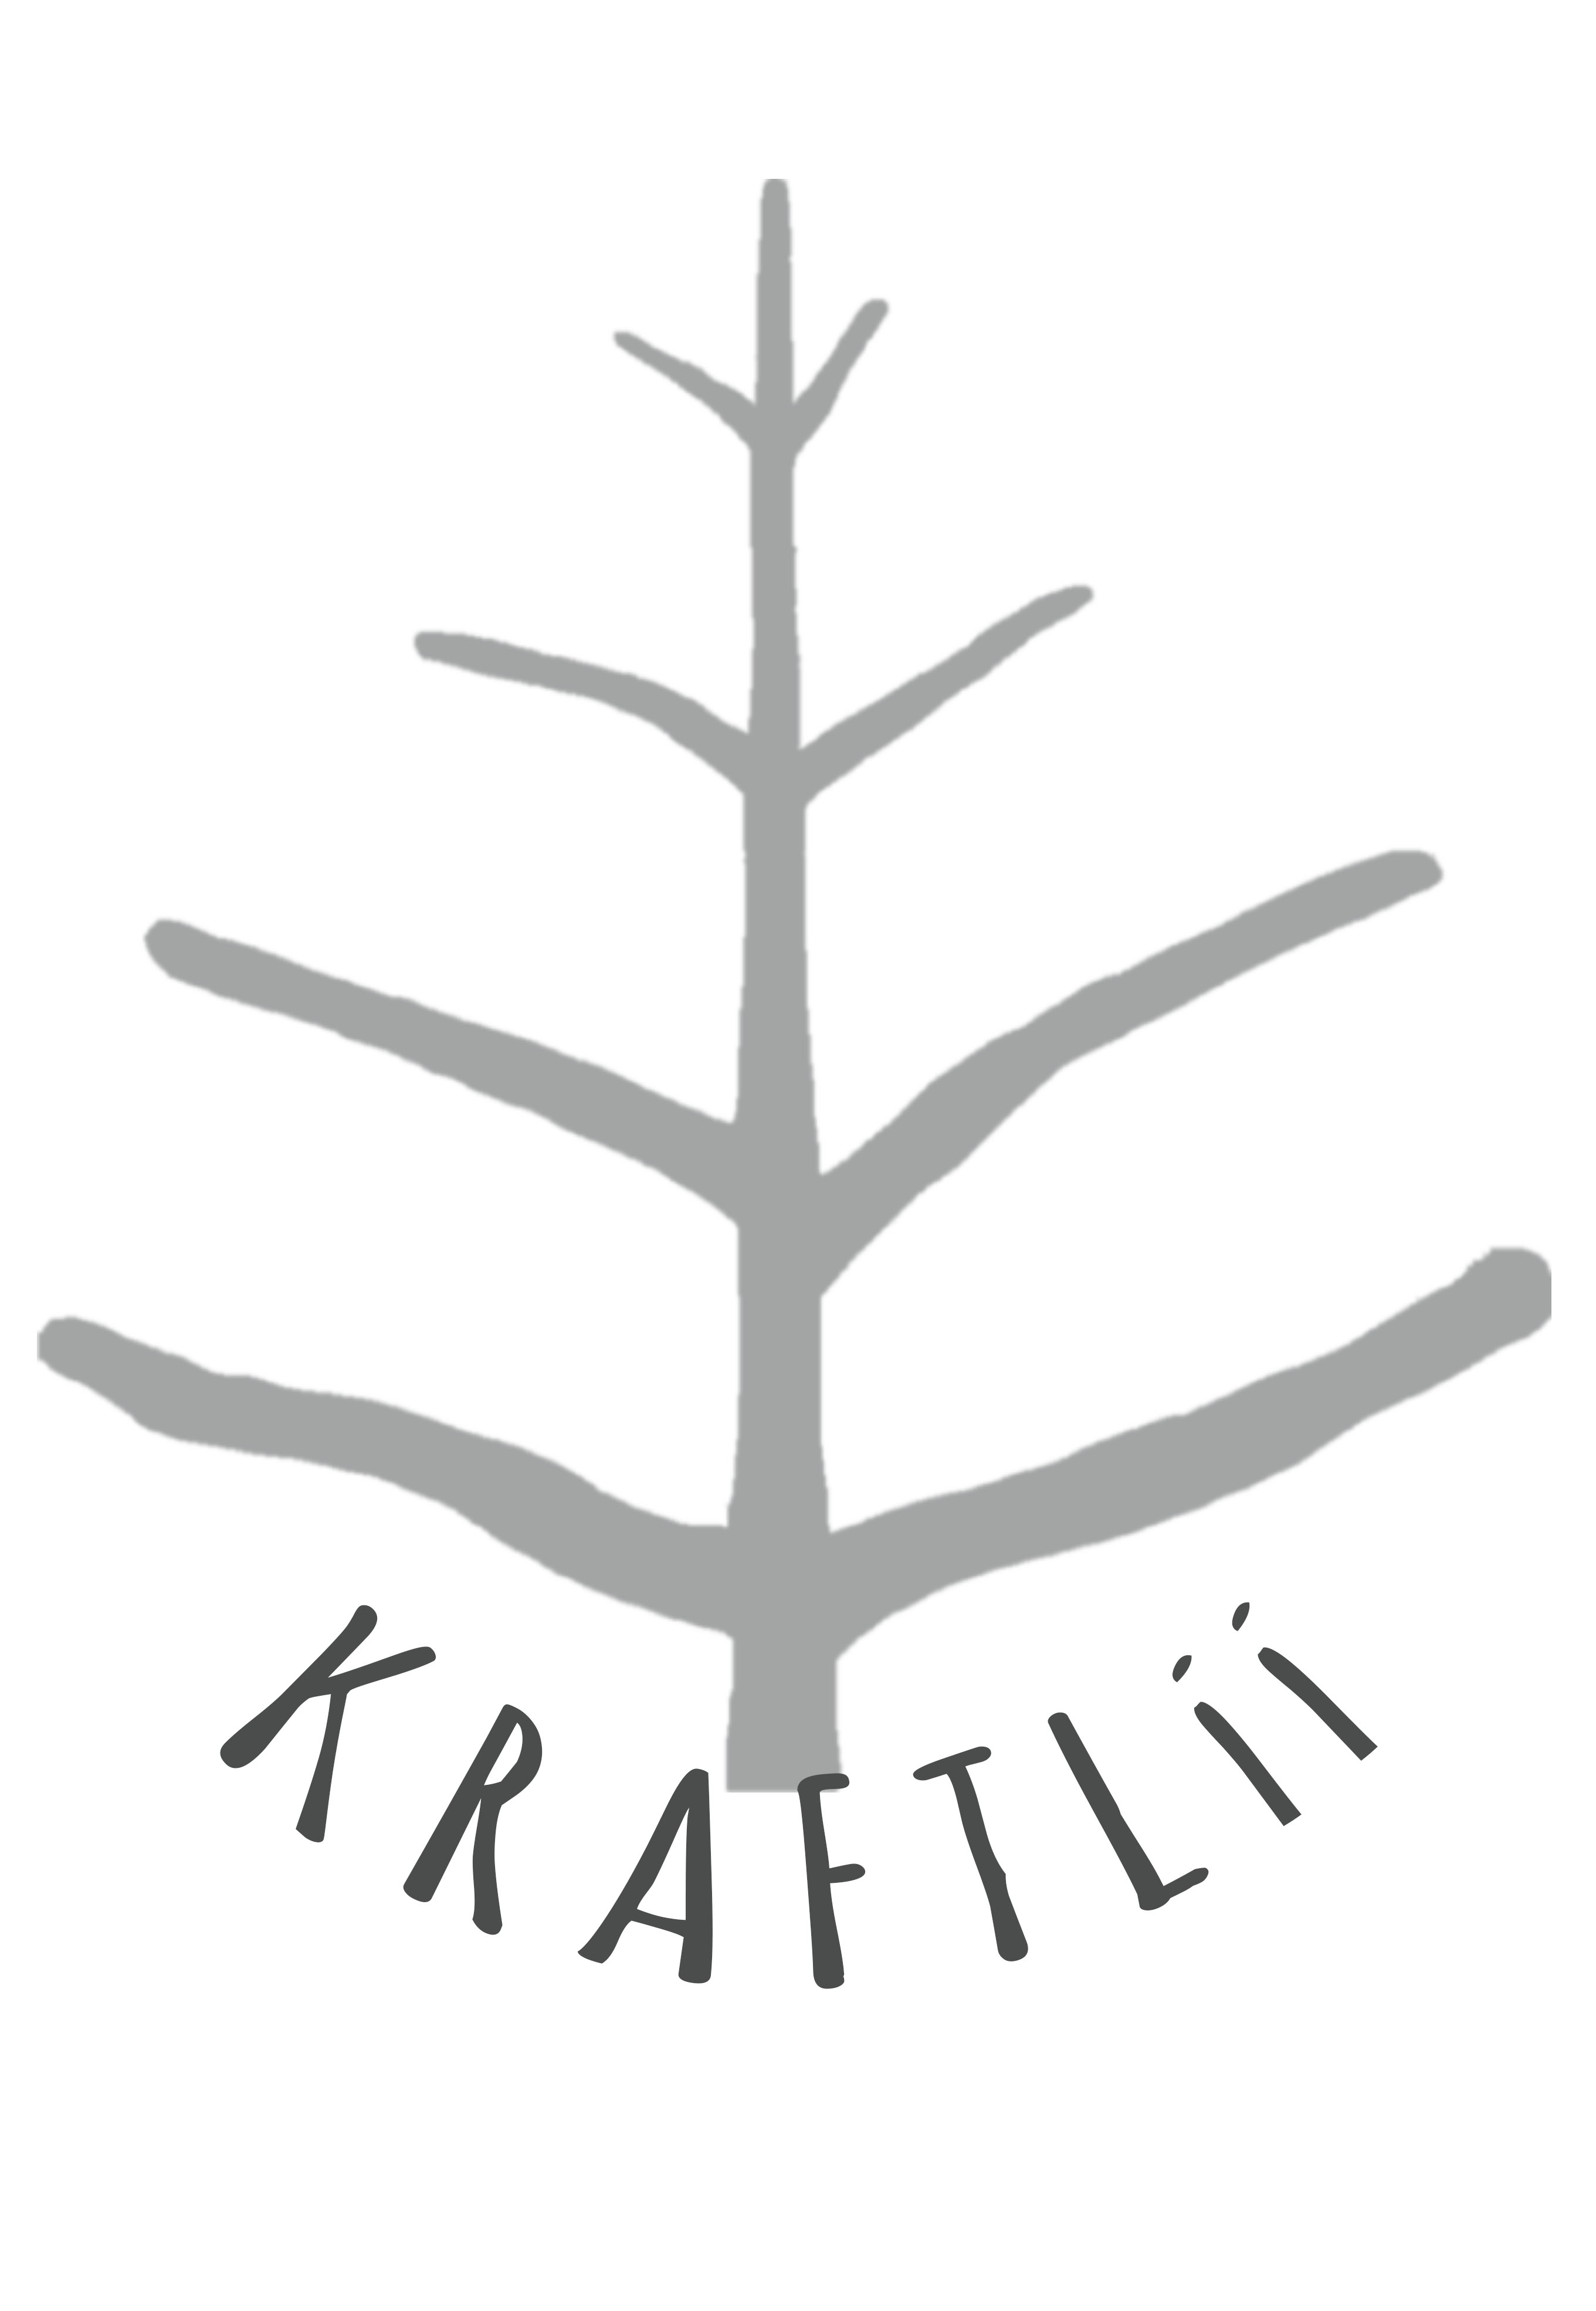 Kraftlii business logo 